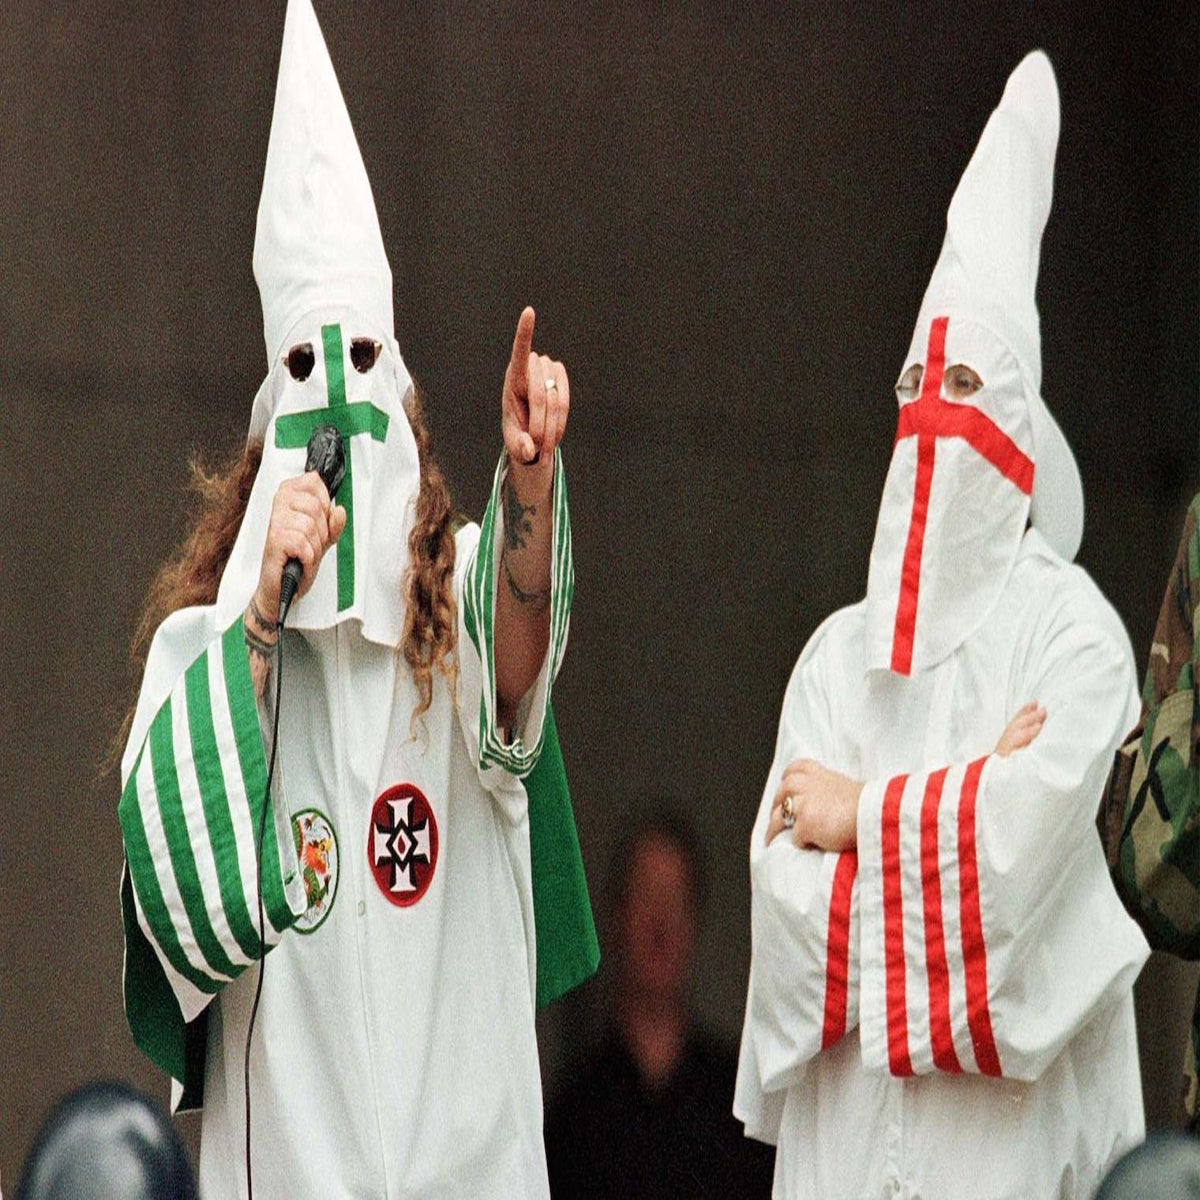 Three teenagers in Woodsboro, Texas dressed in KKK garb for